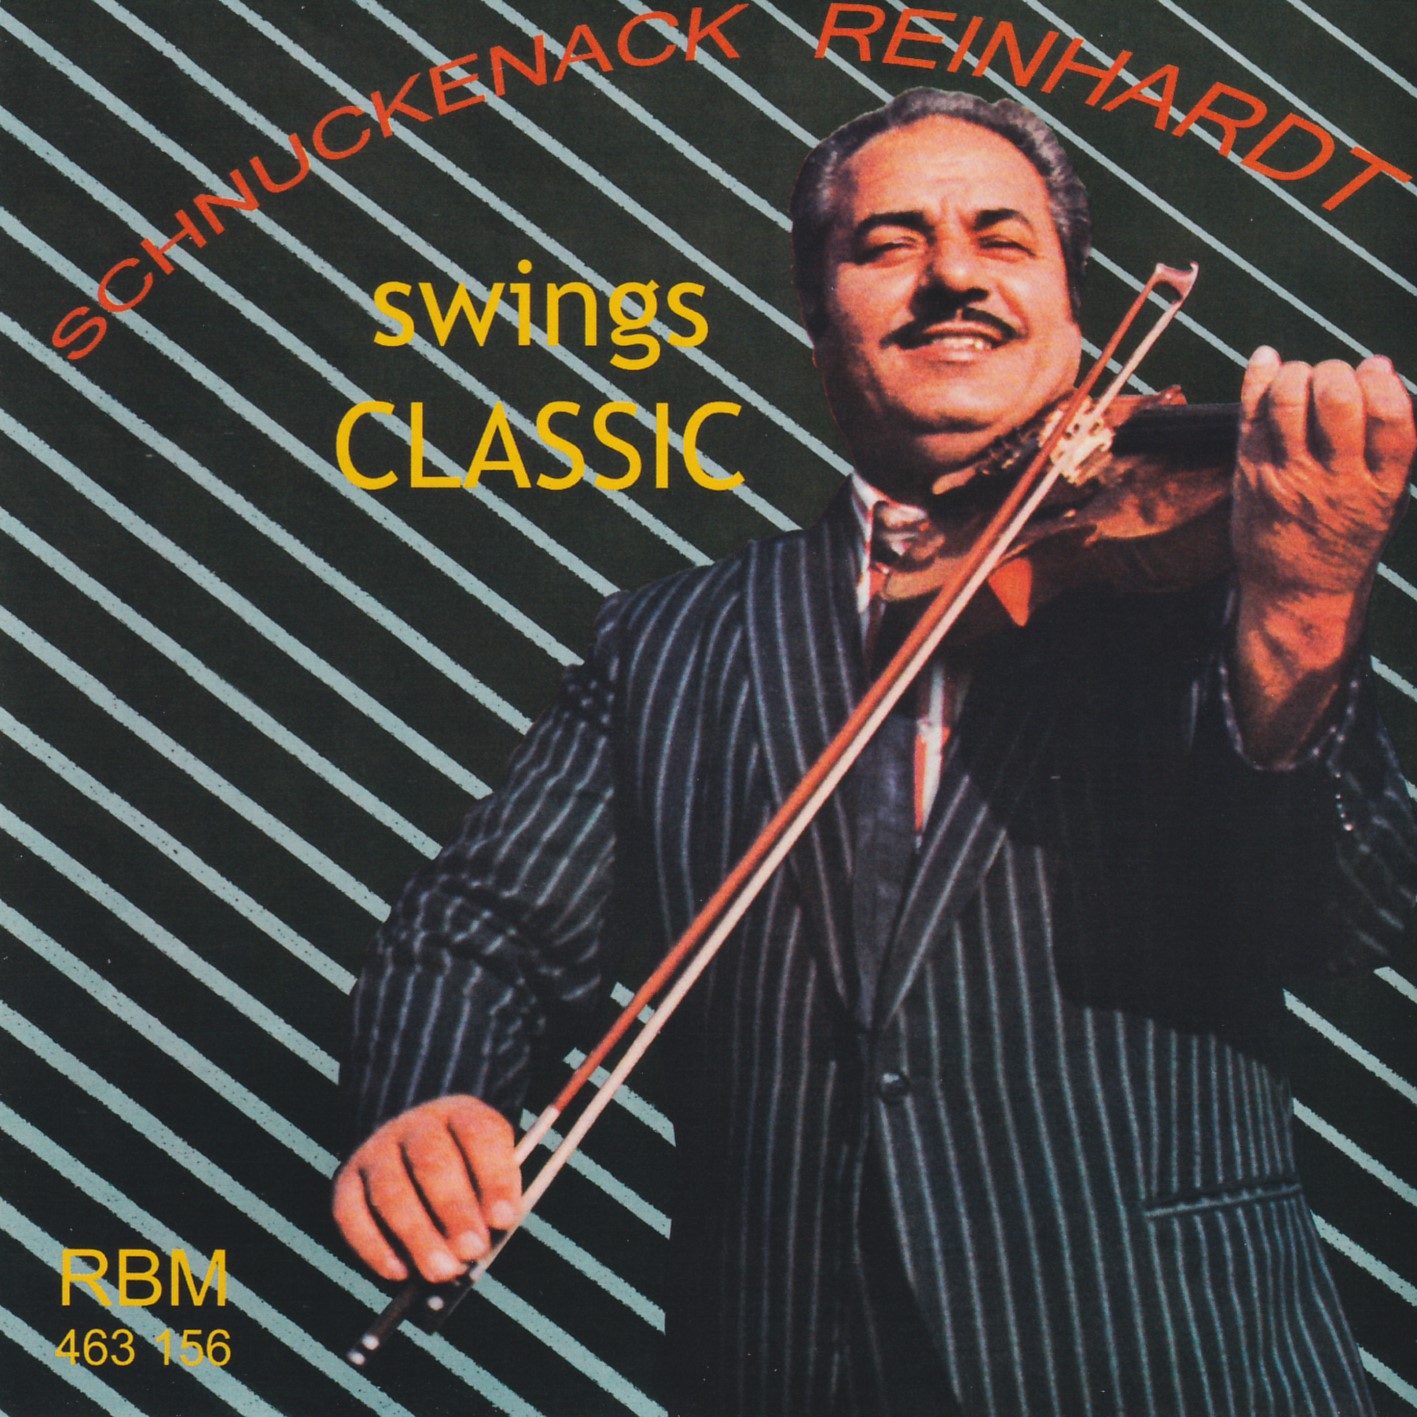 Schnuckenack Reinhardt Quintett  - swings classic